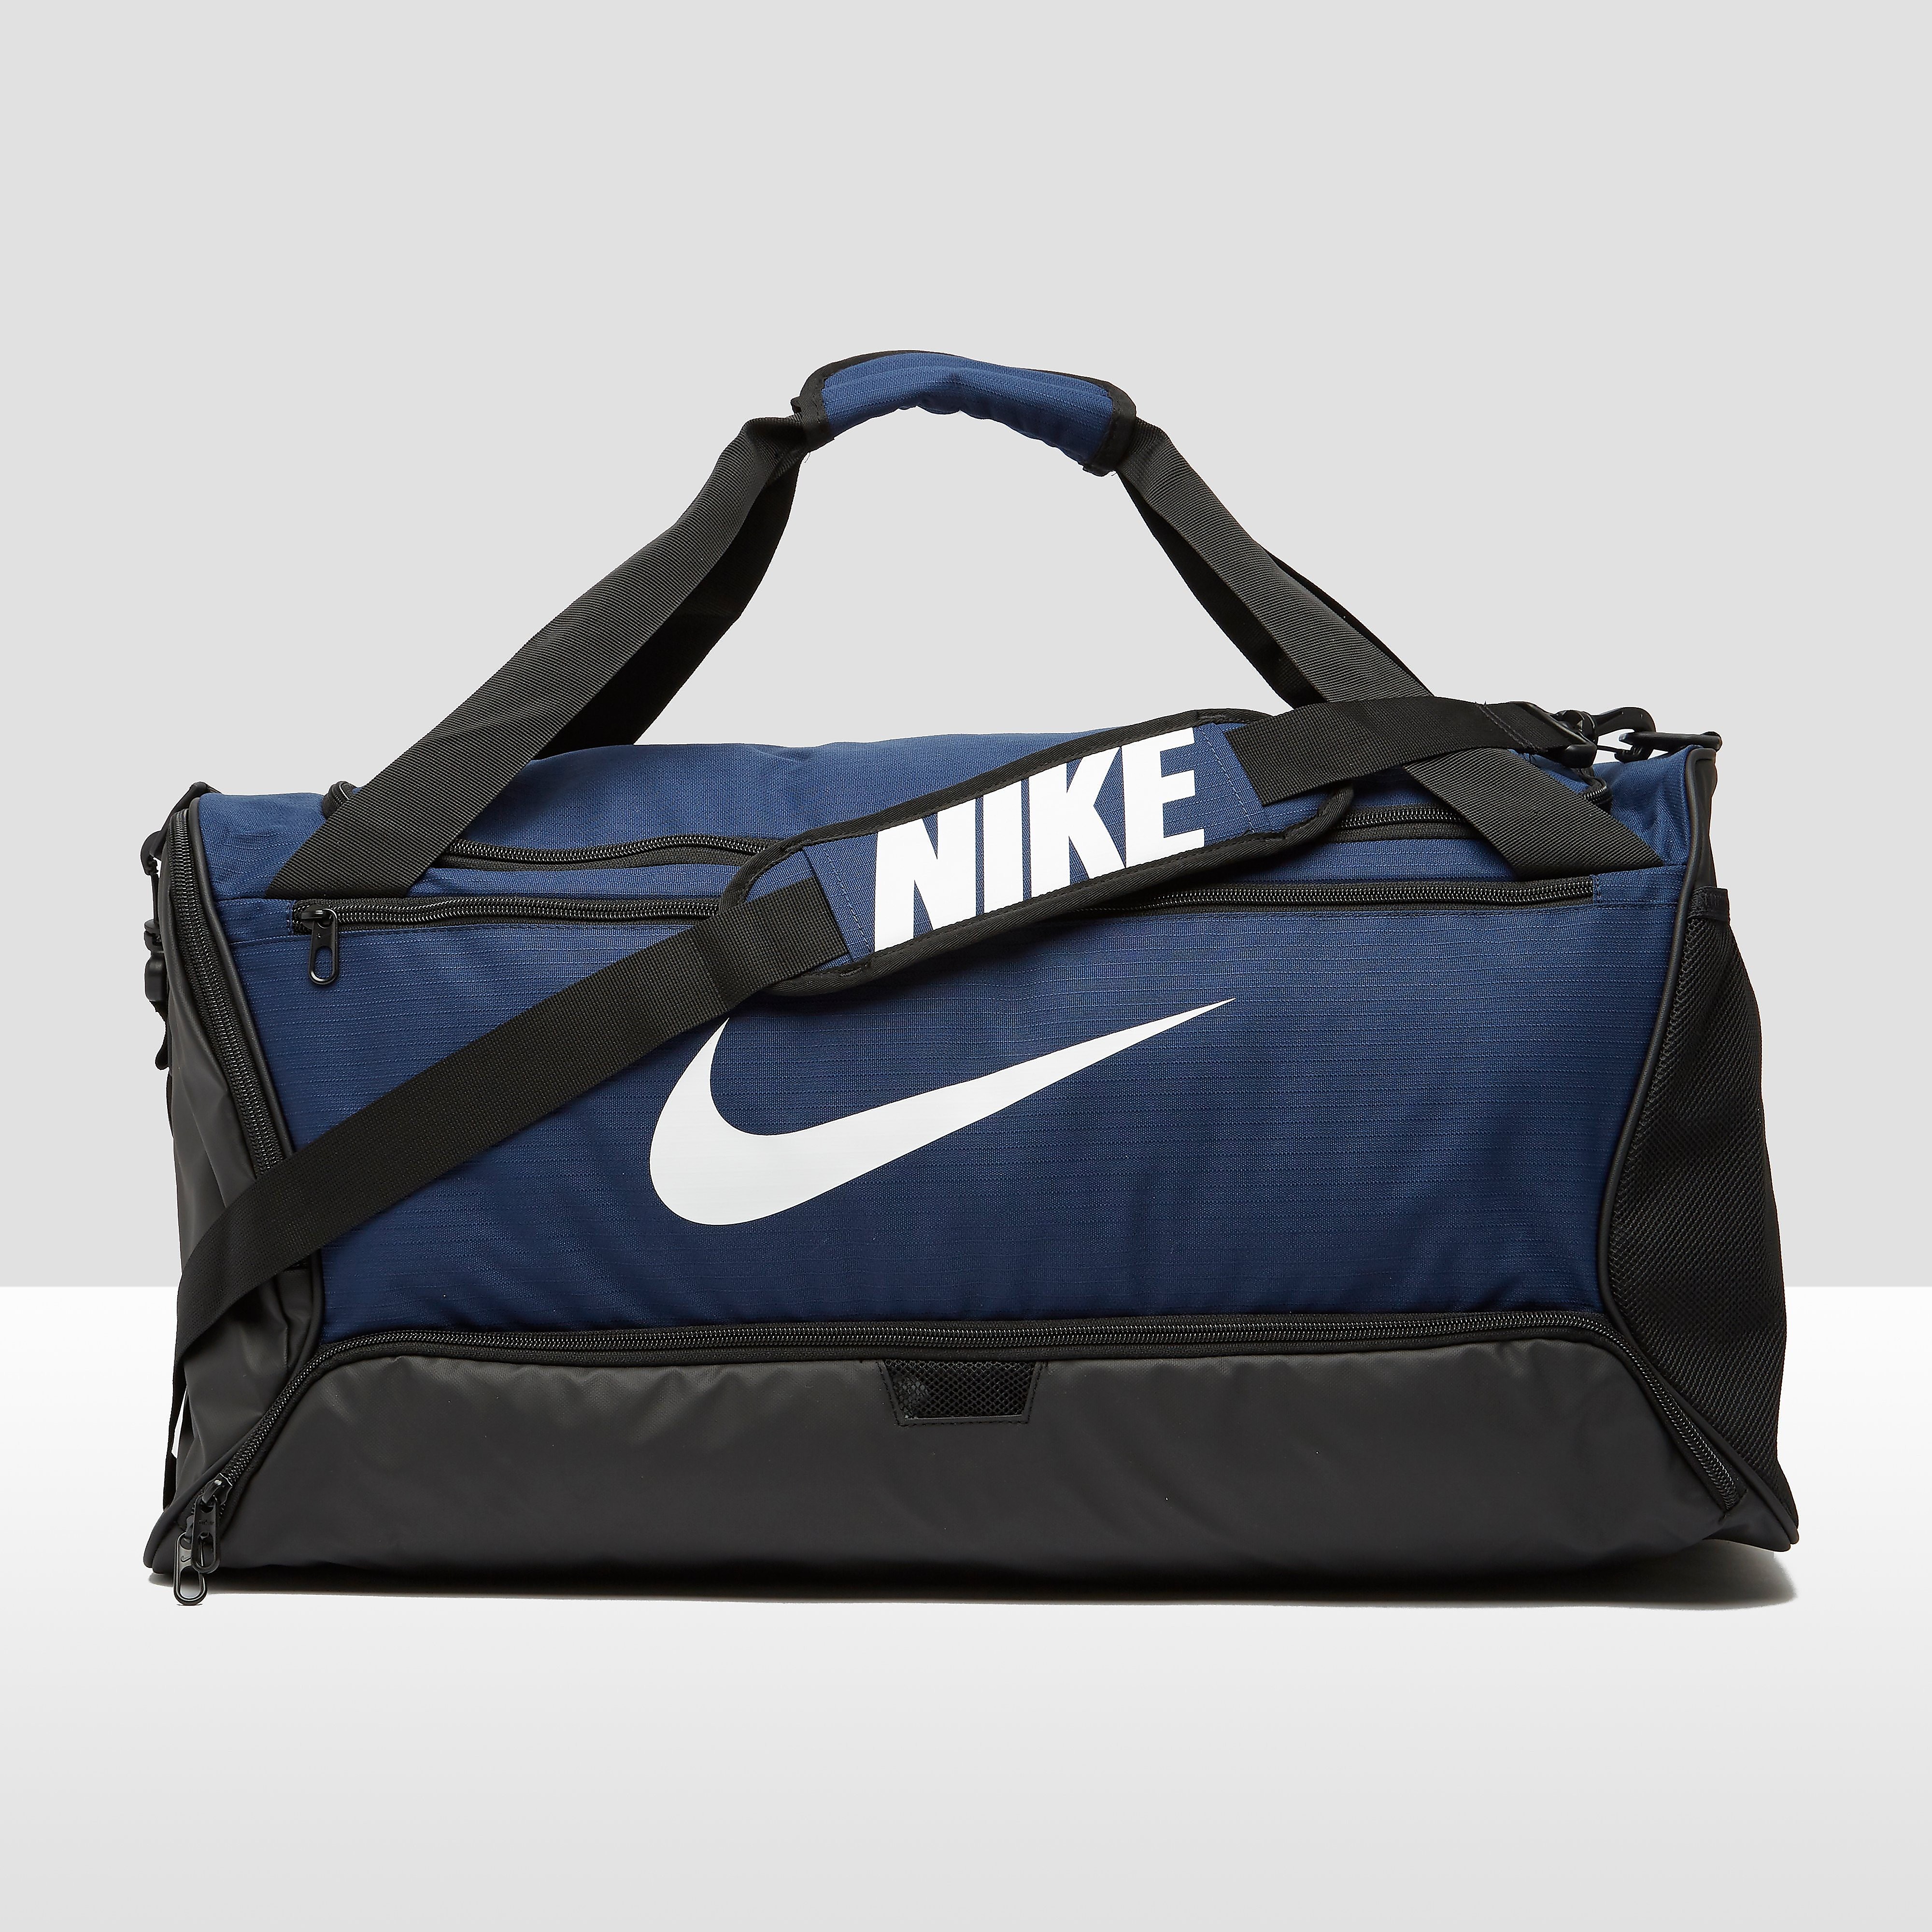 Nike nike brasilia duffel voetbaltas medium blauw zwart